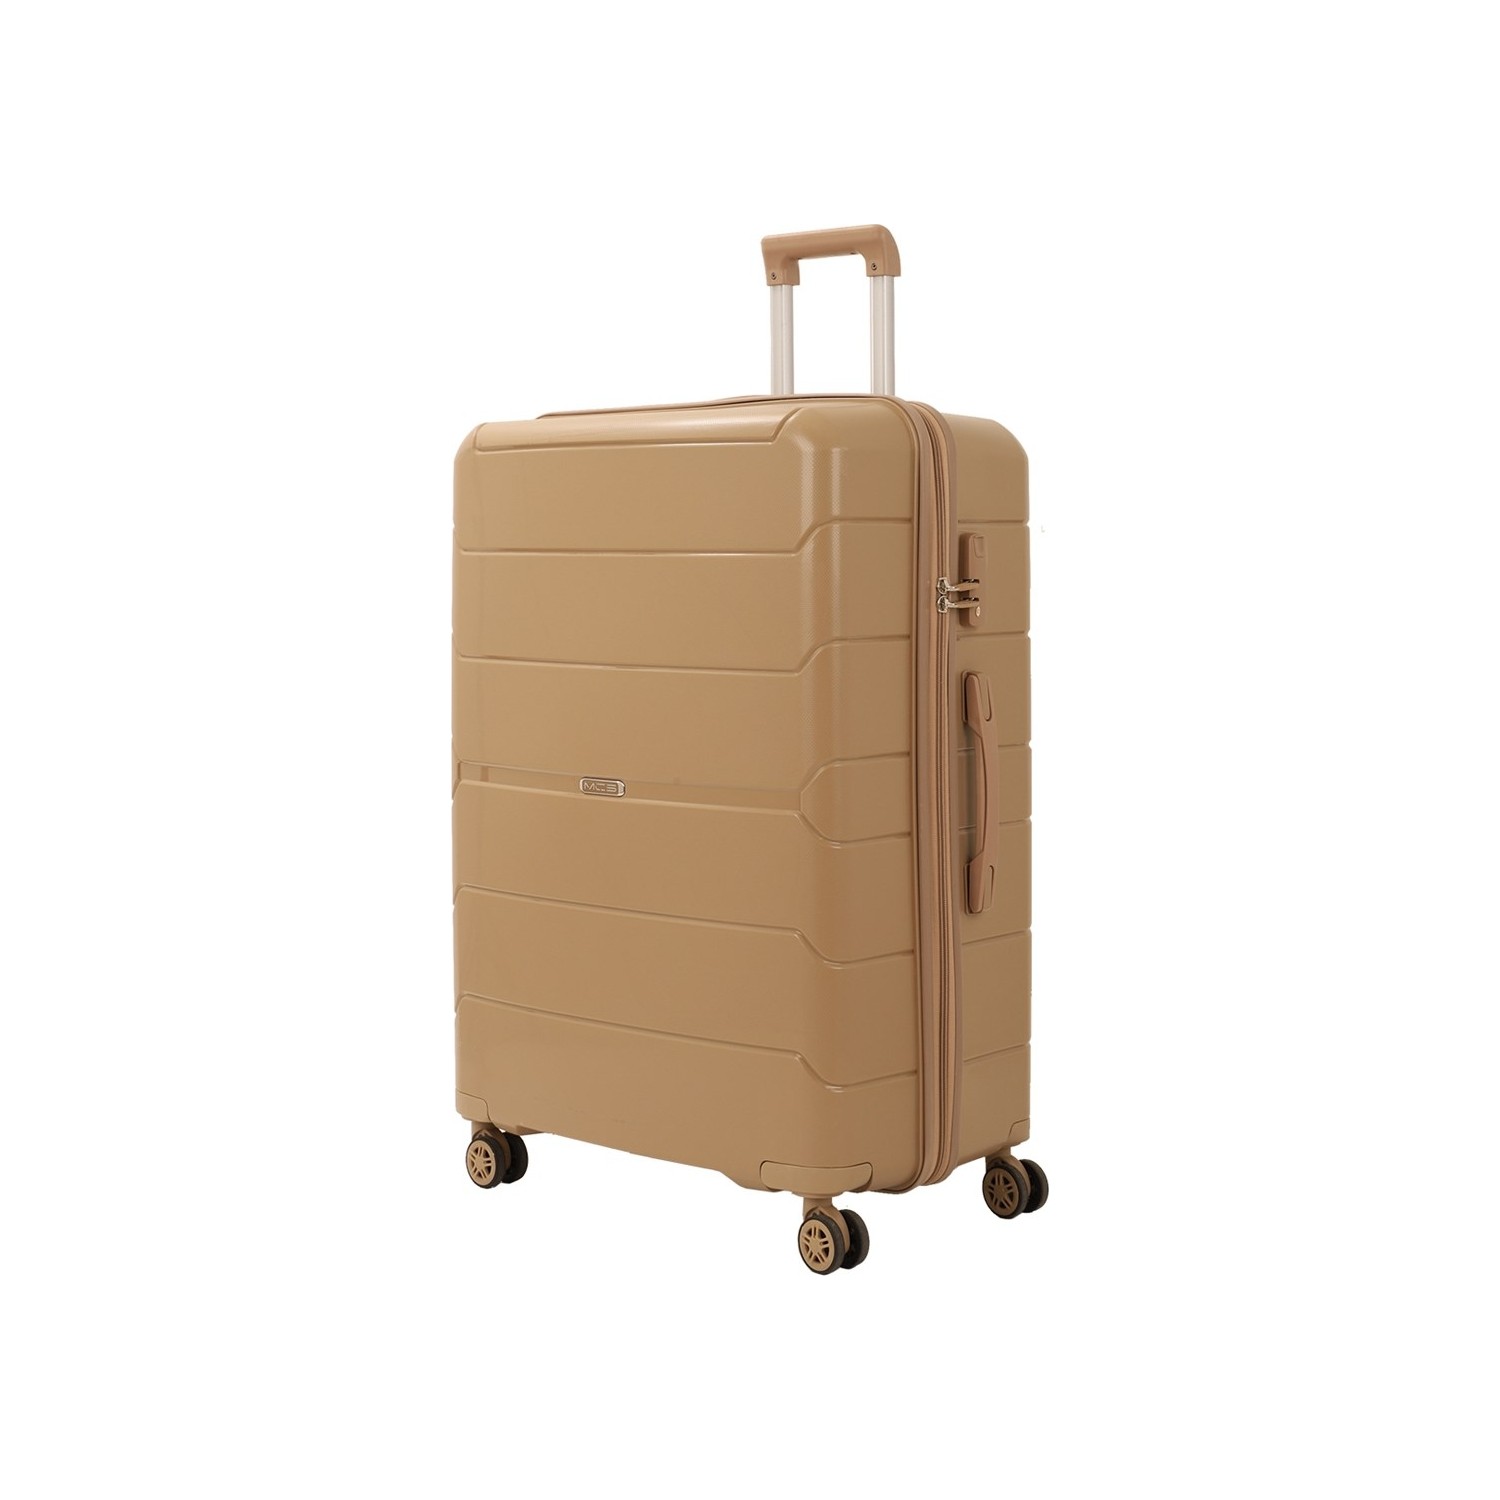 Средний чемодан из полипропилена MCS V366 M CHAMPAGE! Для 18 кг! - 1